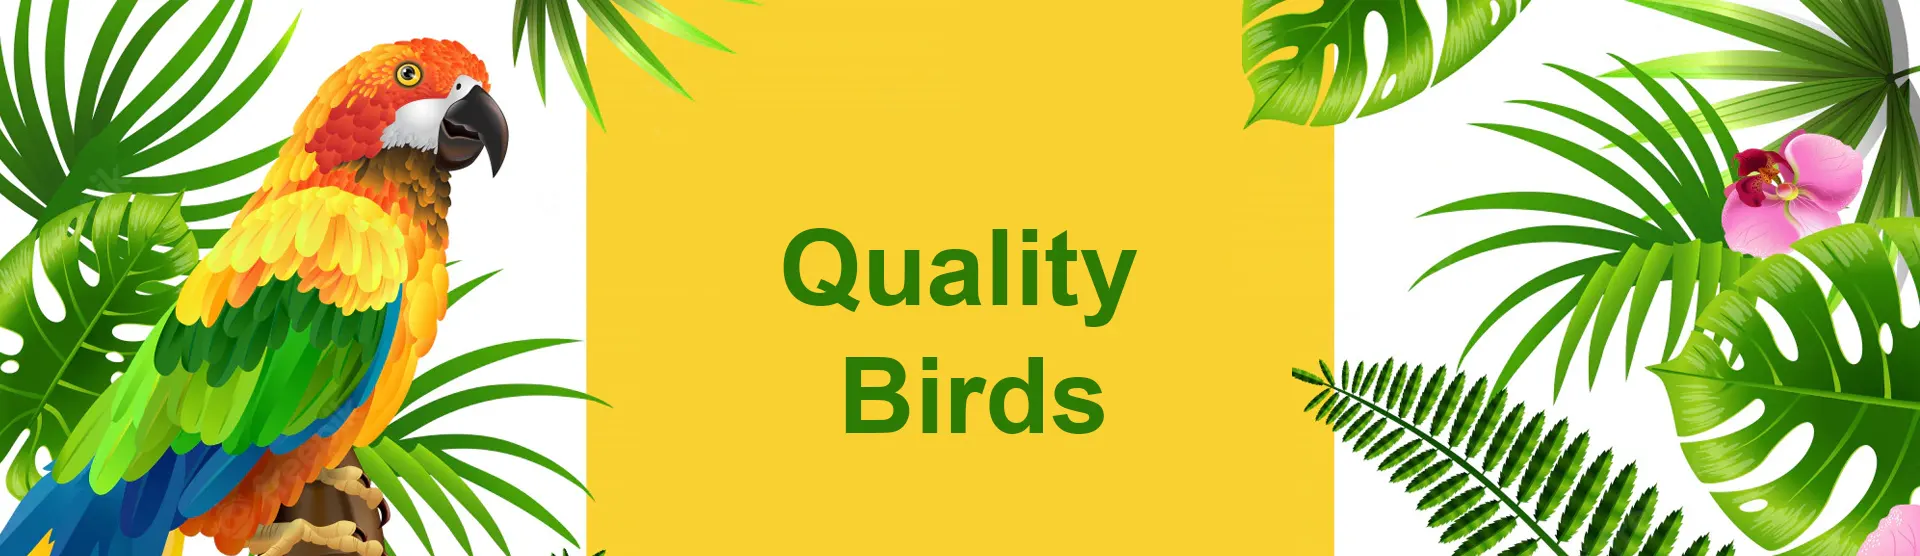 Quality Birds